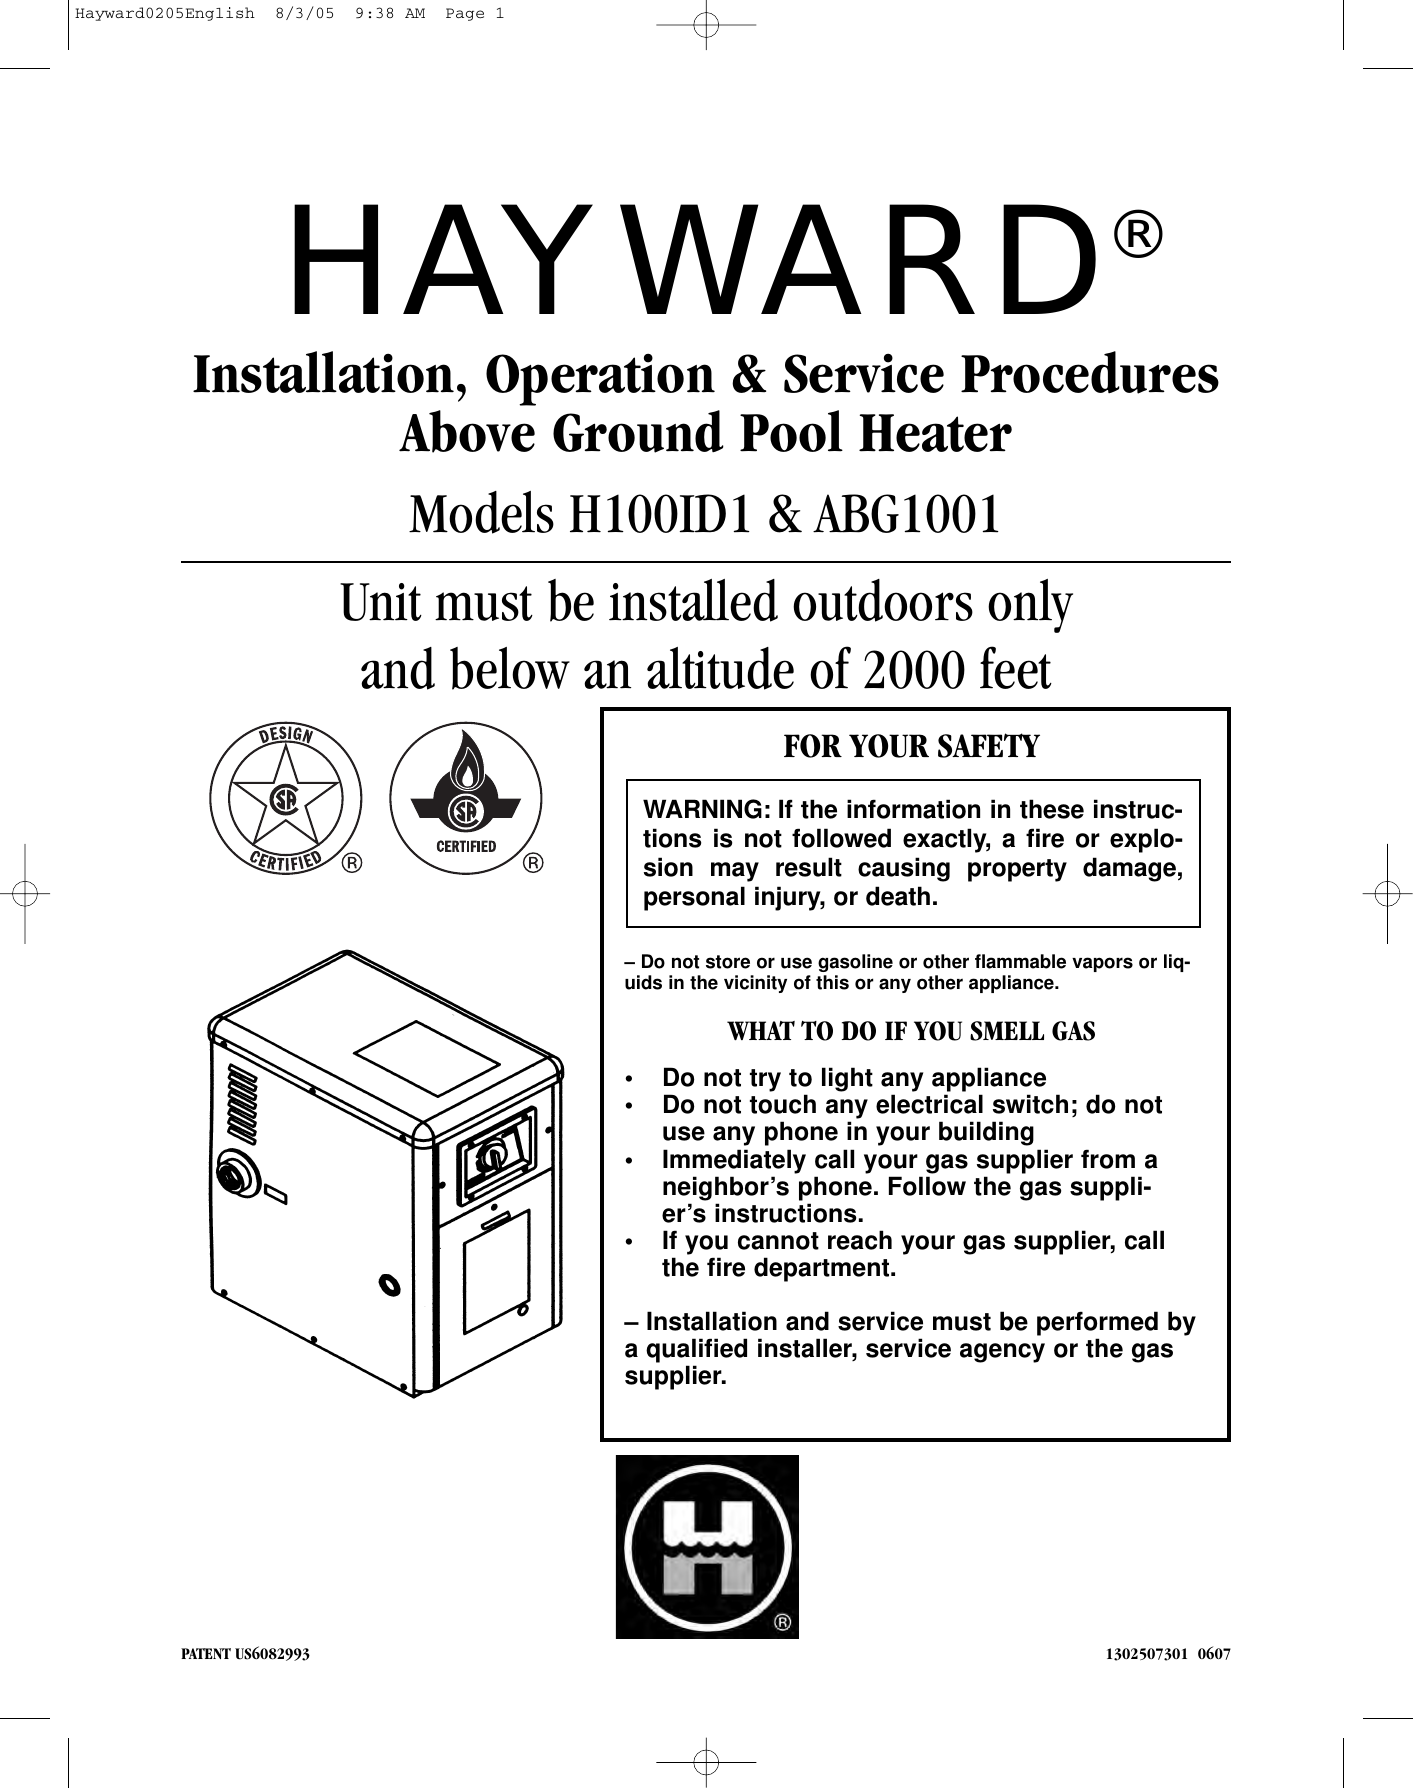 Page 1 of 8 - Hayward-Pools Hayward-Pools-Abg1001-Users-Manual- Hayward - Installation, Operation & Service Procedures Above Ground Pool Heater  Hayward-pools-abg1001-users-manual